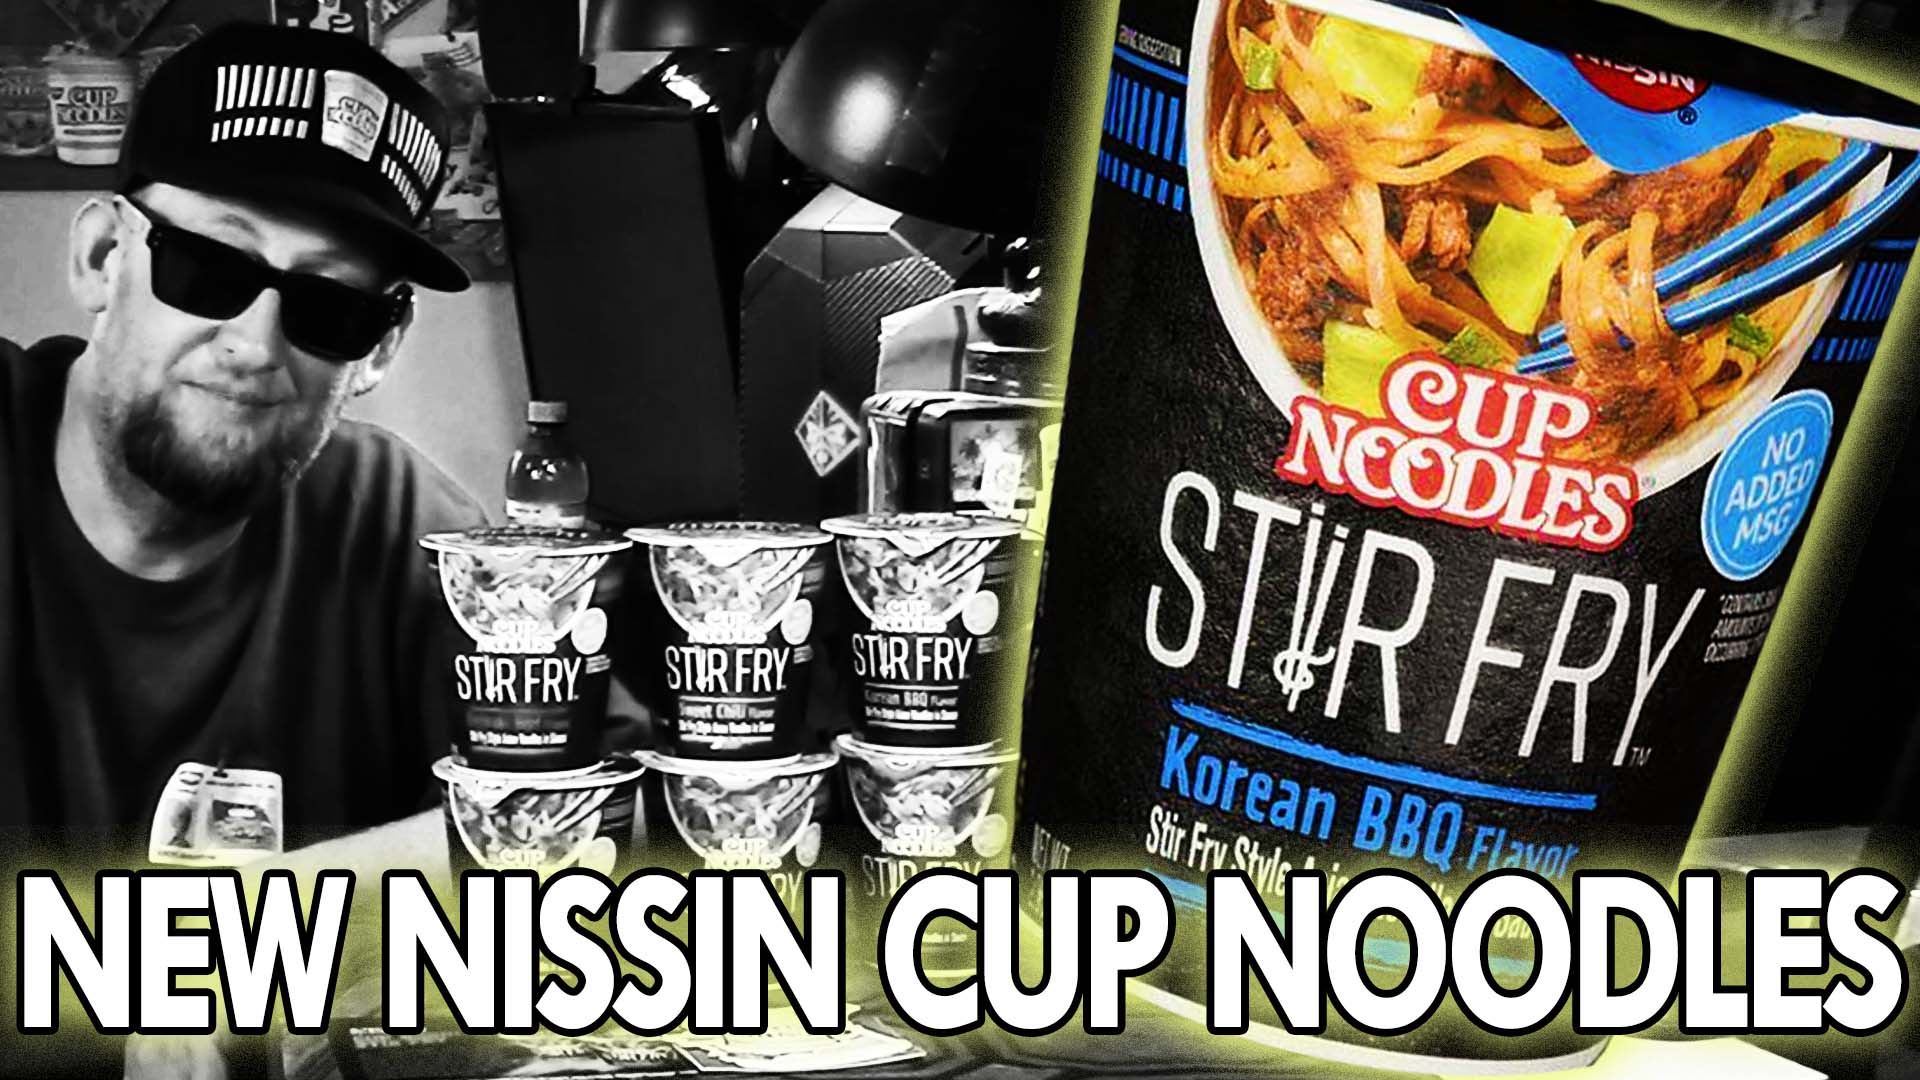 Nissin Cup Noodles Stir Fry: First Taste Club #004 Unboxing